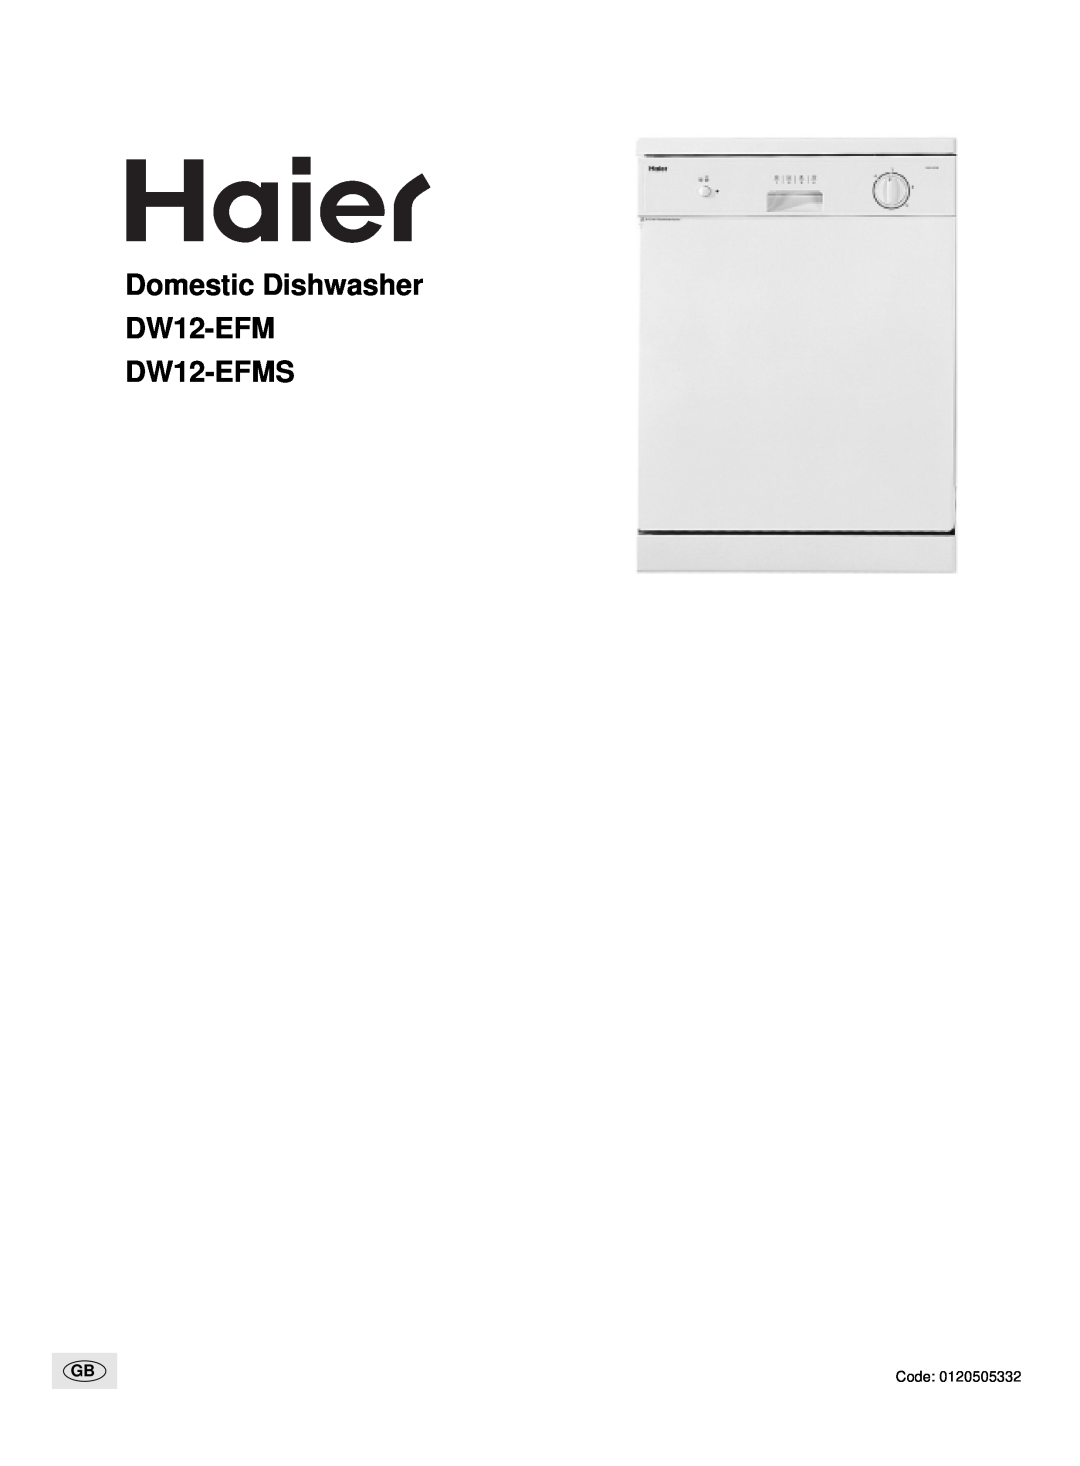 Haier manual Domestic Dishwasher DW12-EFM DW12-EFMS 